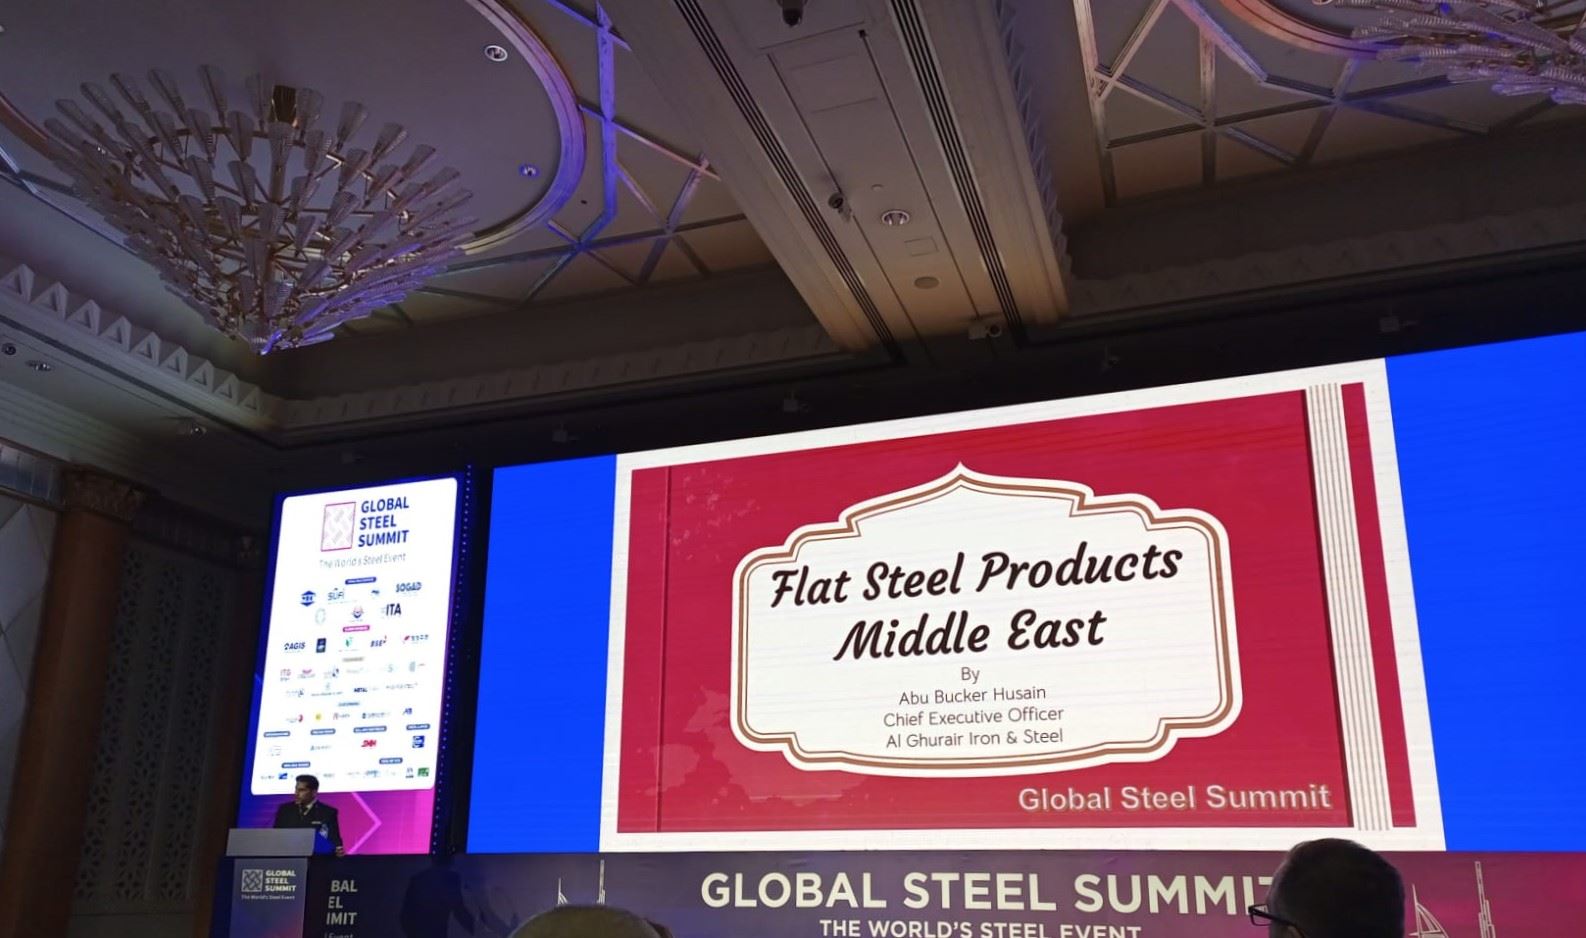 Al Ghurair Iron&Steel speaks about the Middle East market at Iron&Steel Global Steel Summit